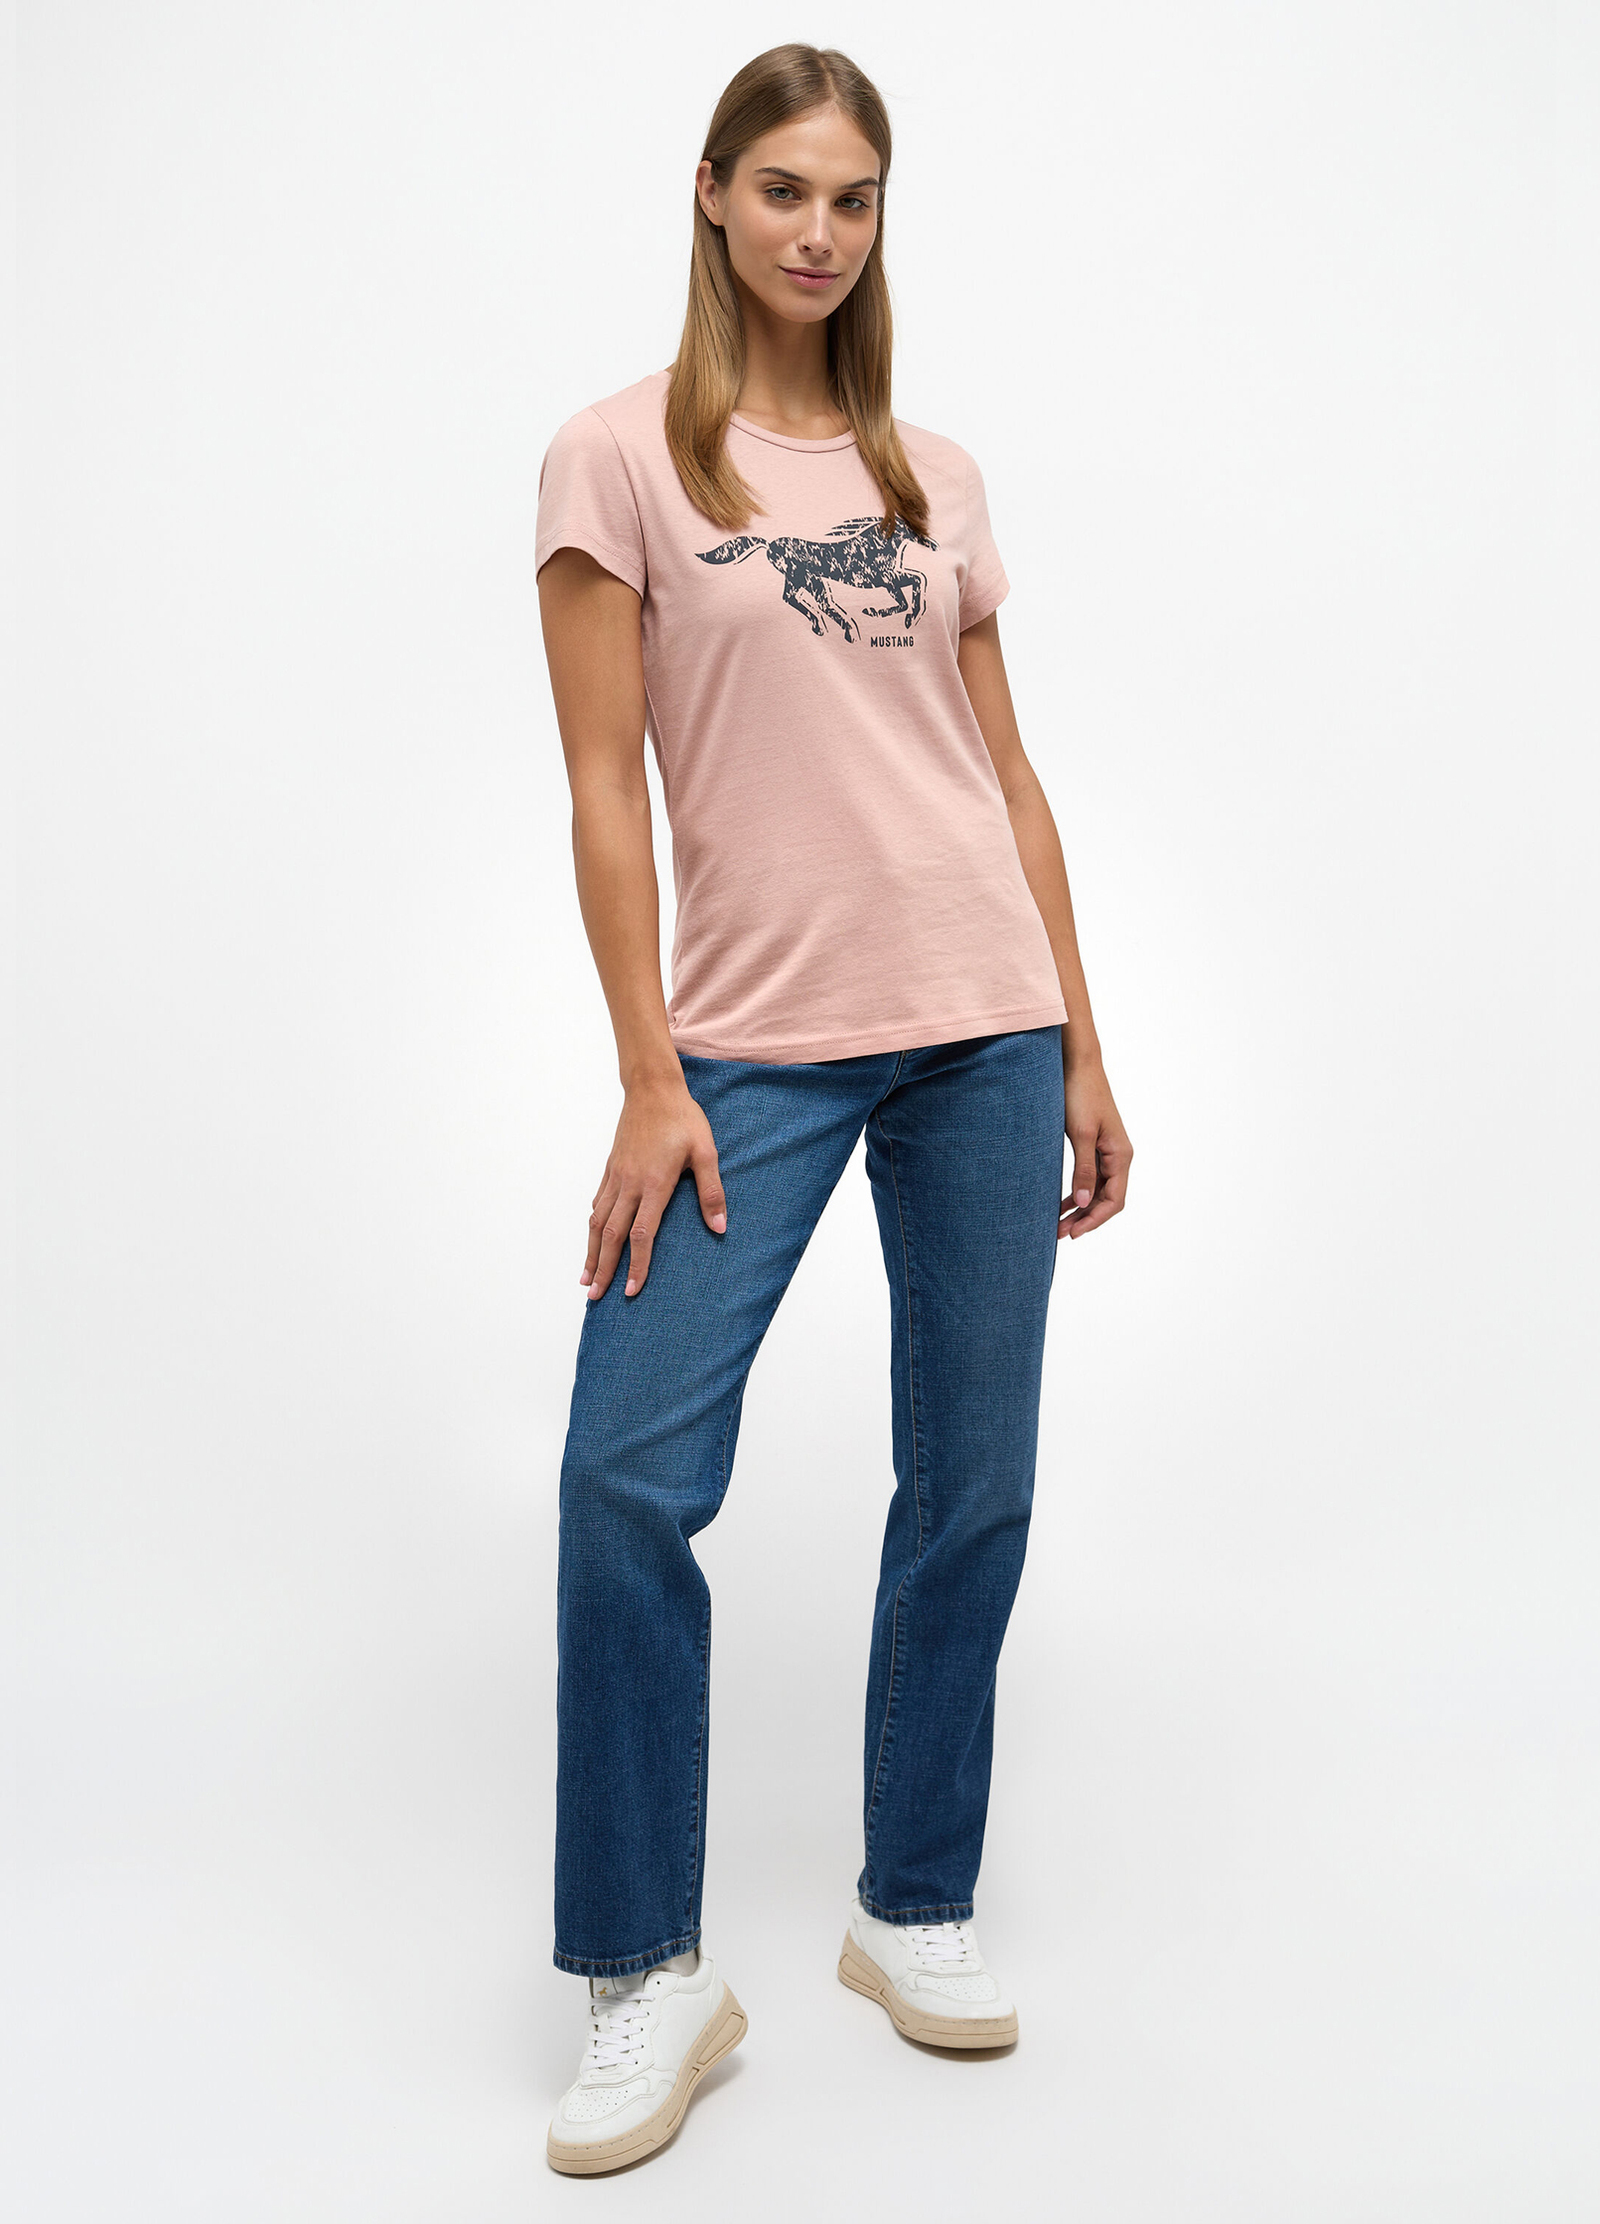 Alexia Print - Jeans® C L Rose Mustang Misty Rozmiar